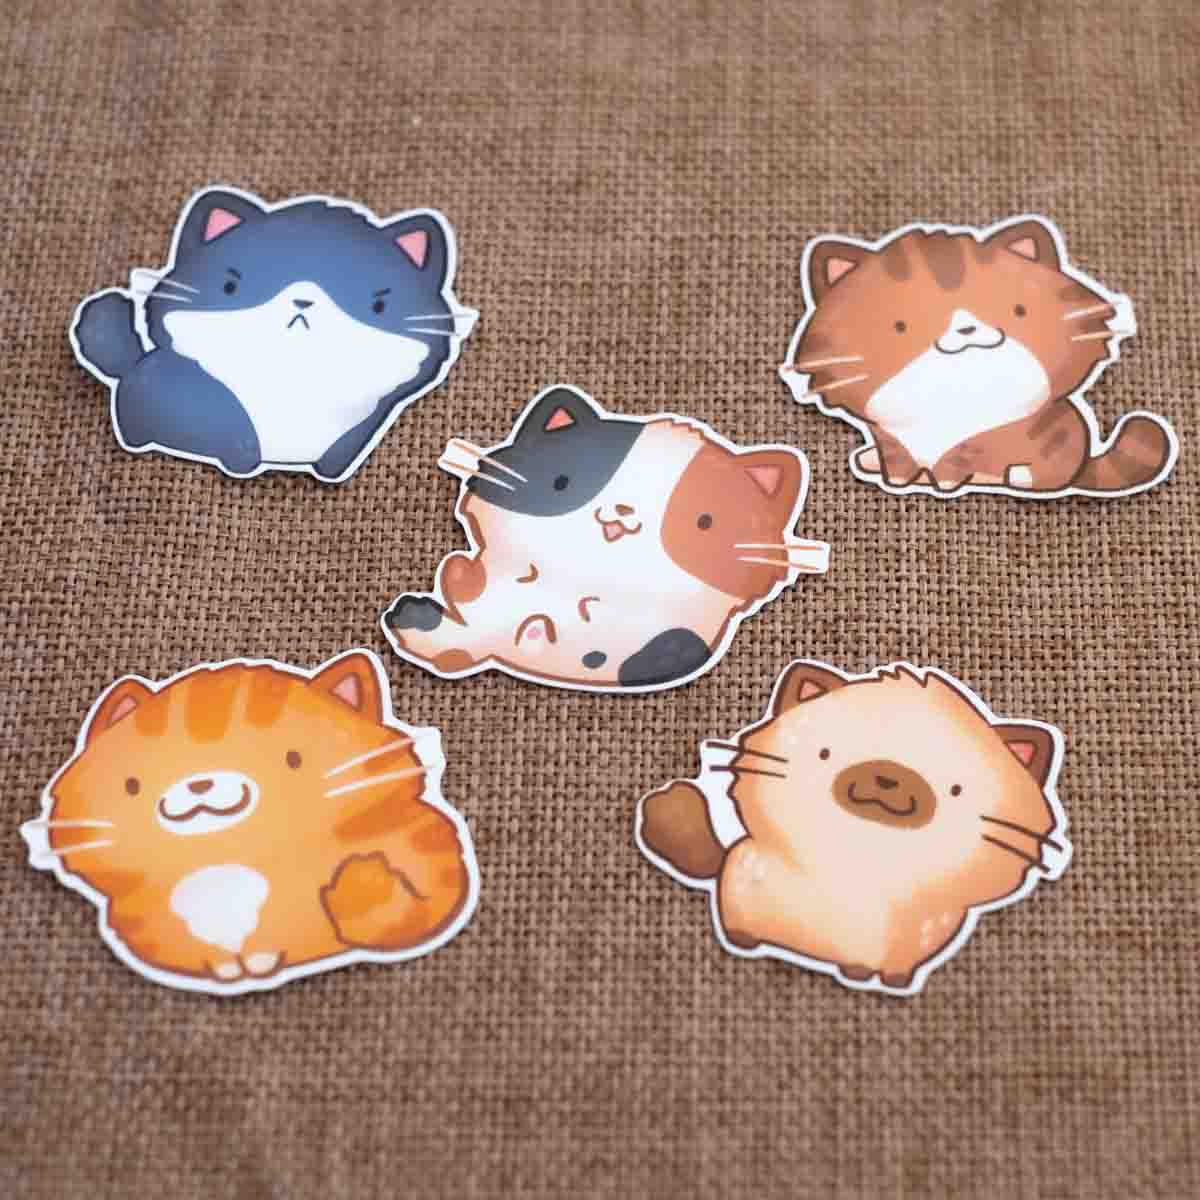 Vinyl stickers (set of 5) - Cute cats